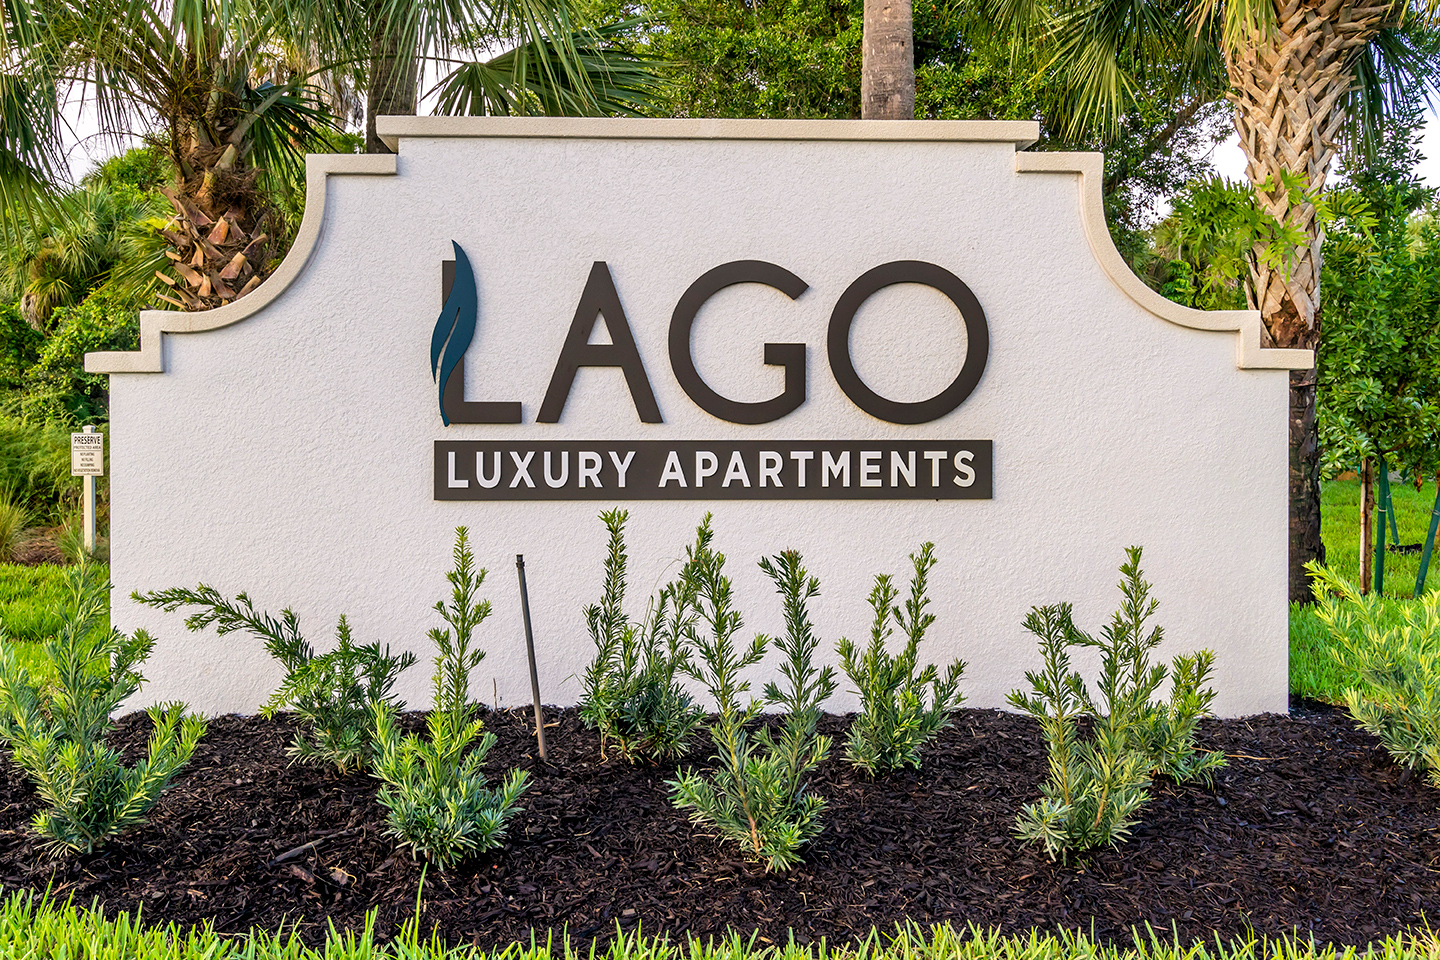 Monument sign for Lago luxury apartment community in Naples